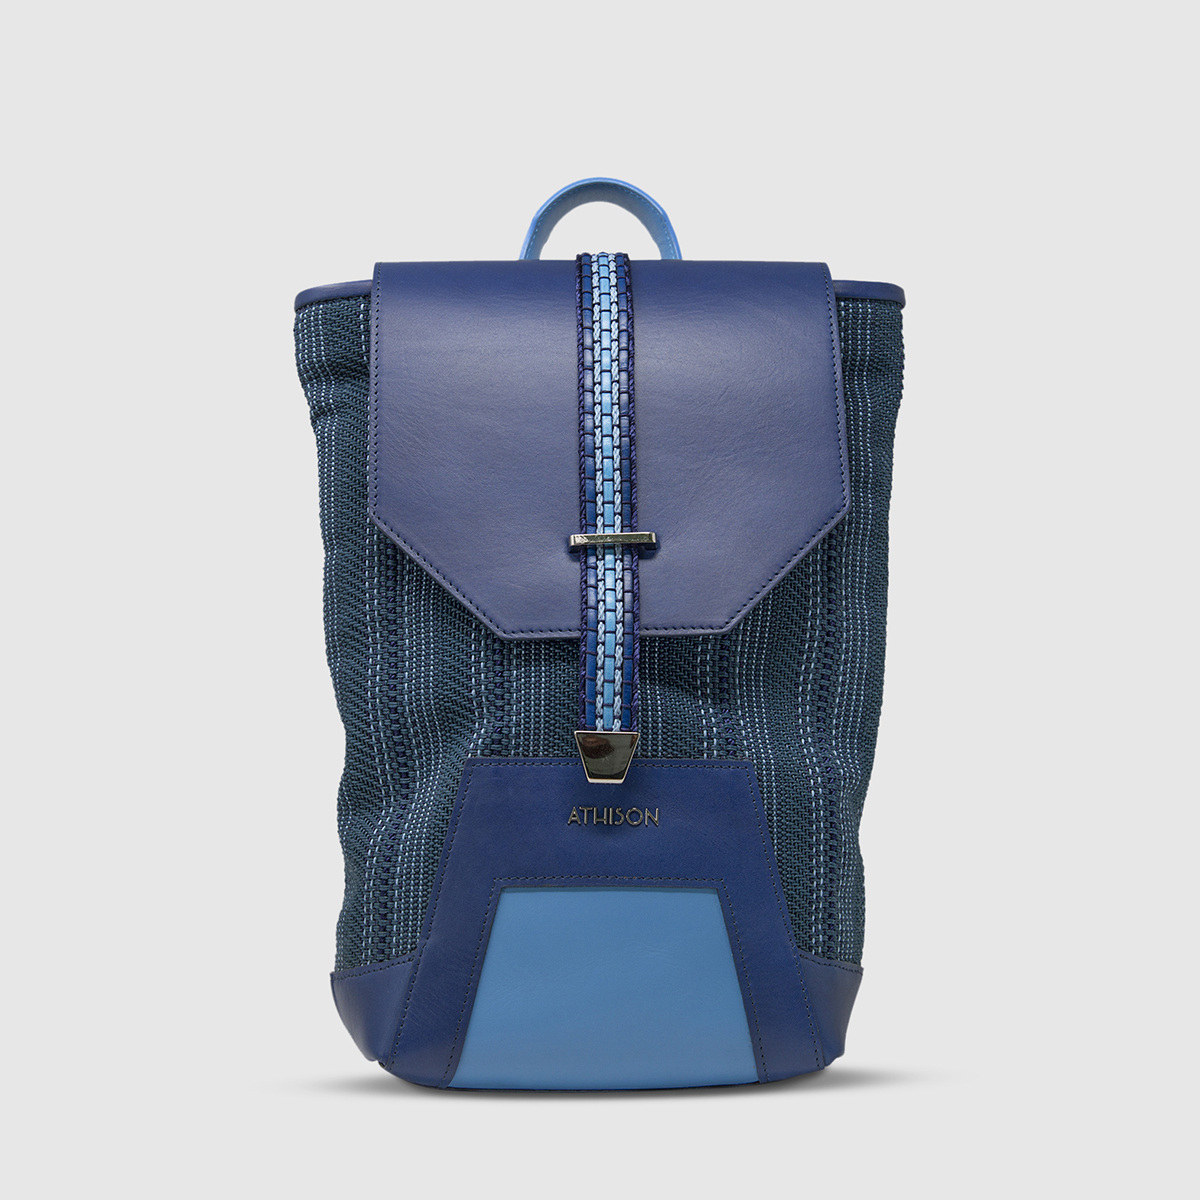 Athison Blue/Celestial Backpack